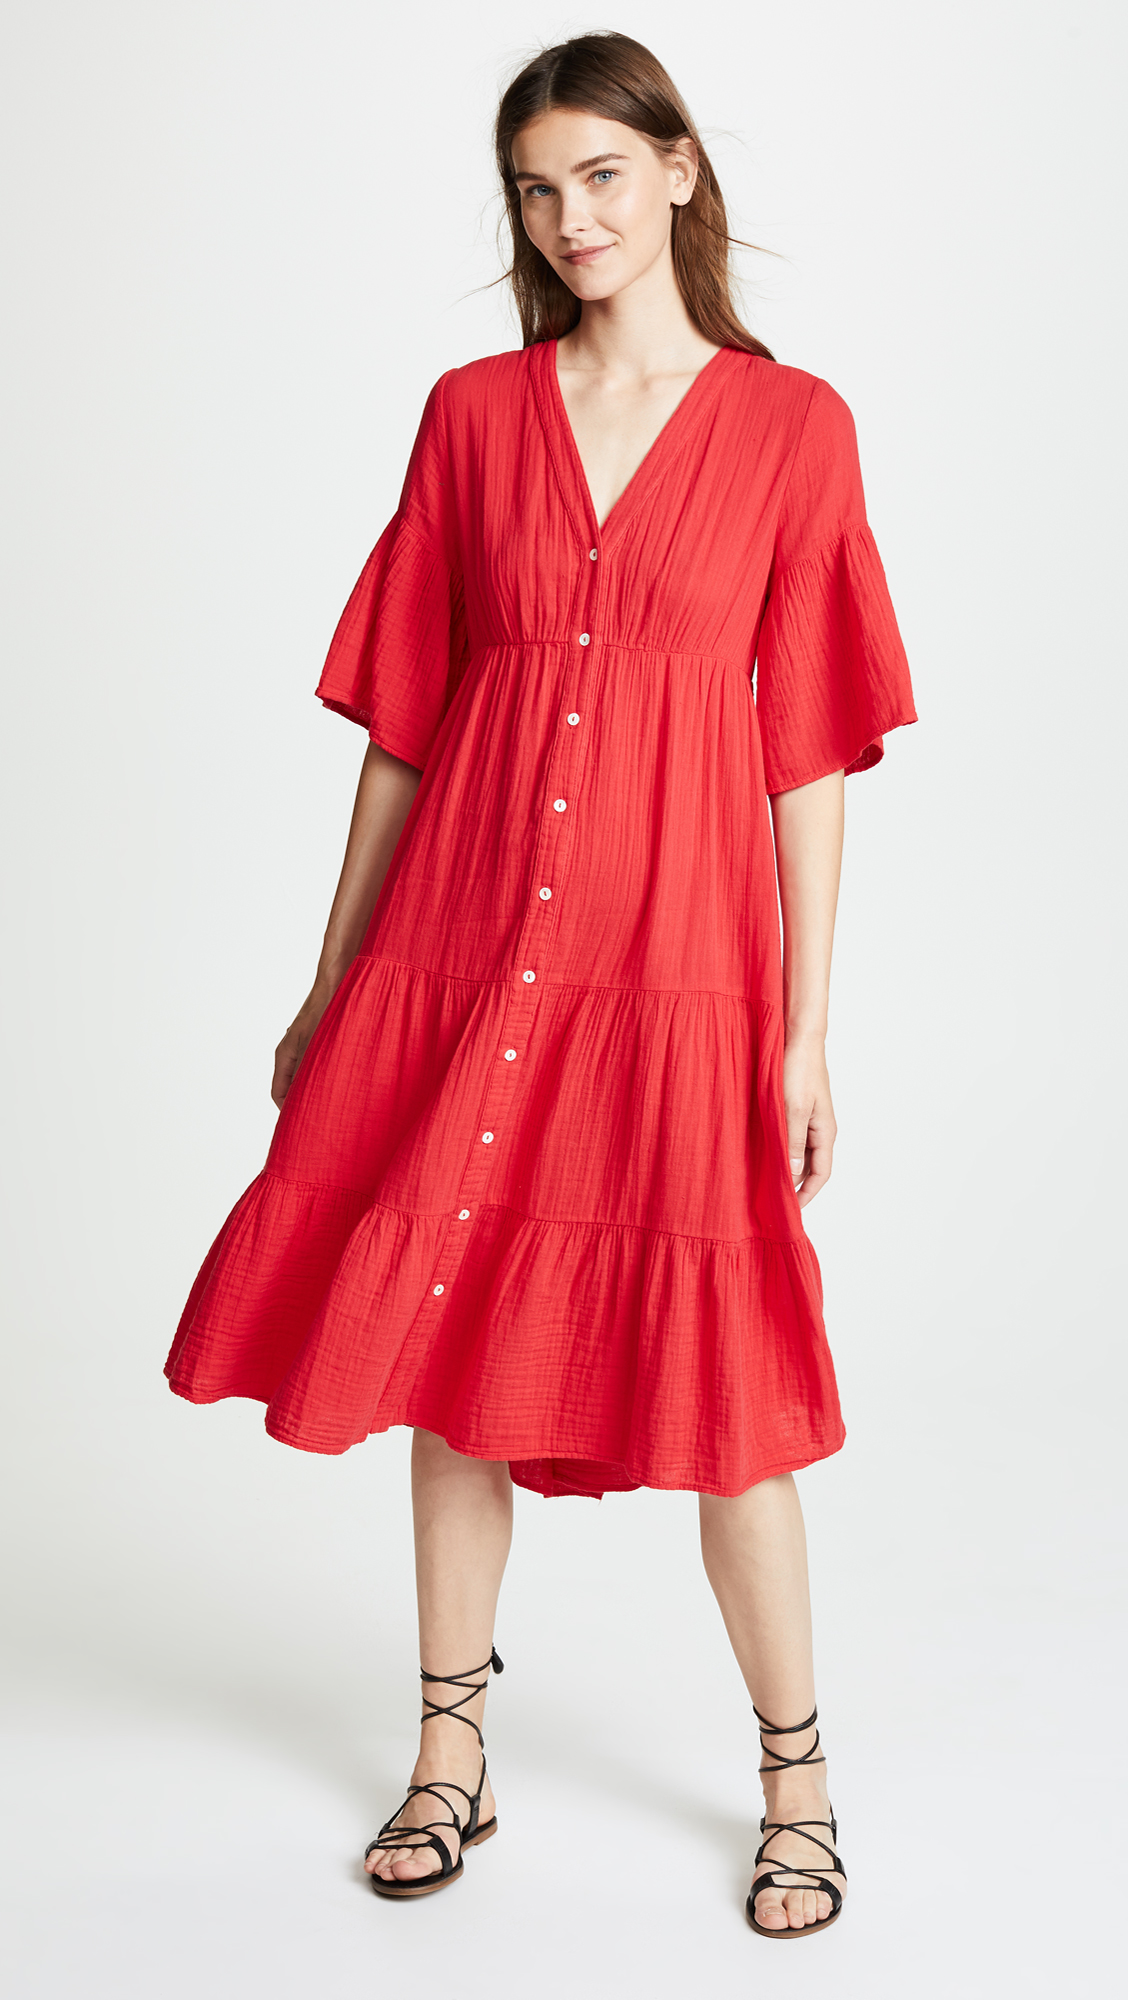 Red Button-Up Dress